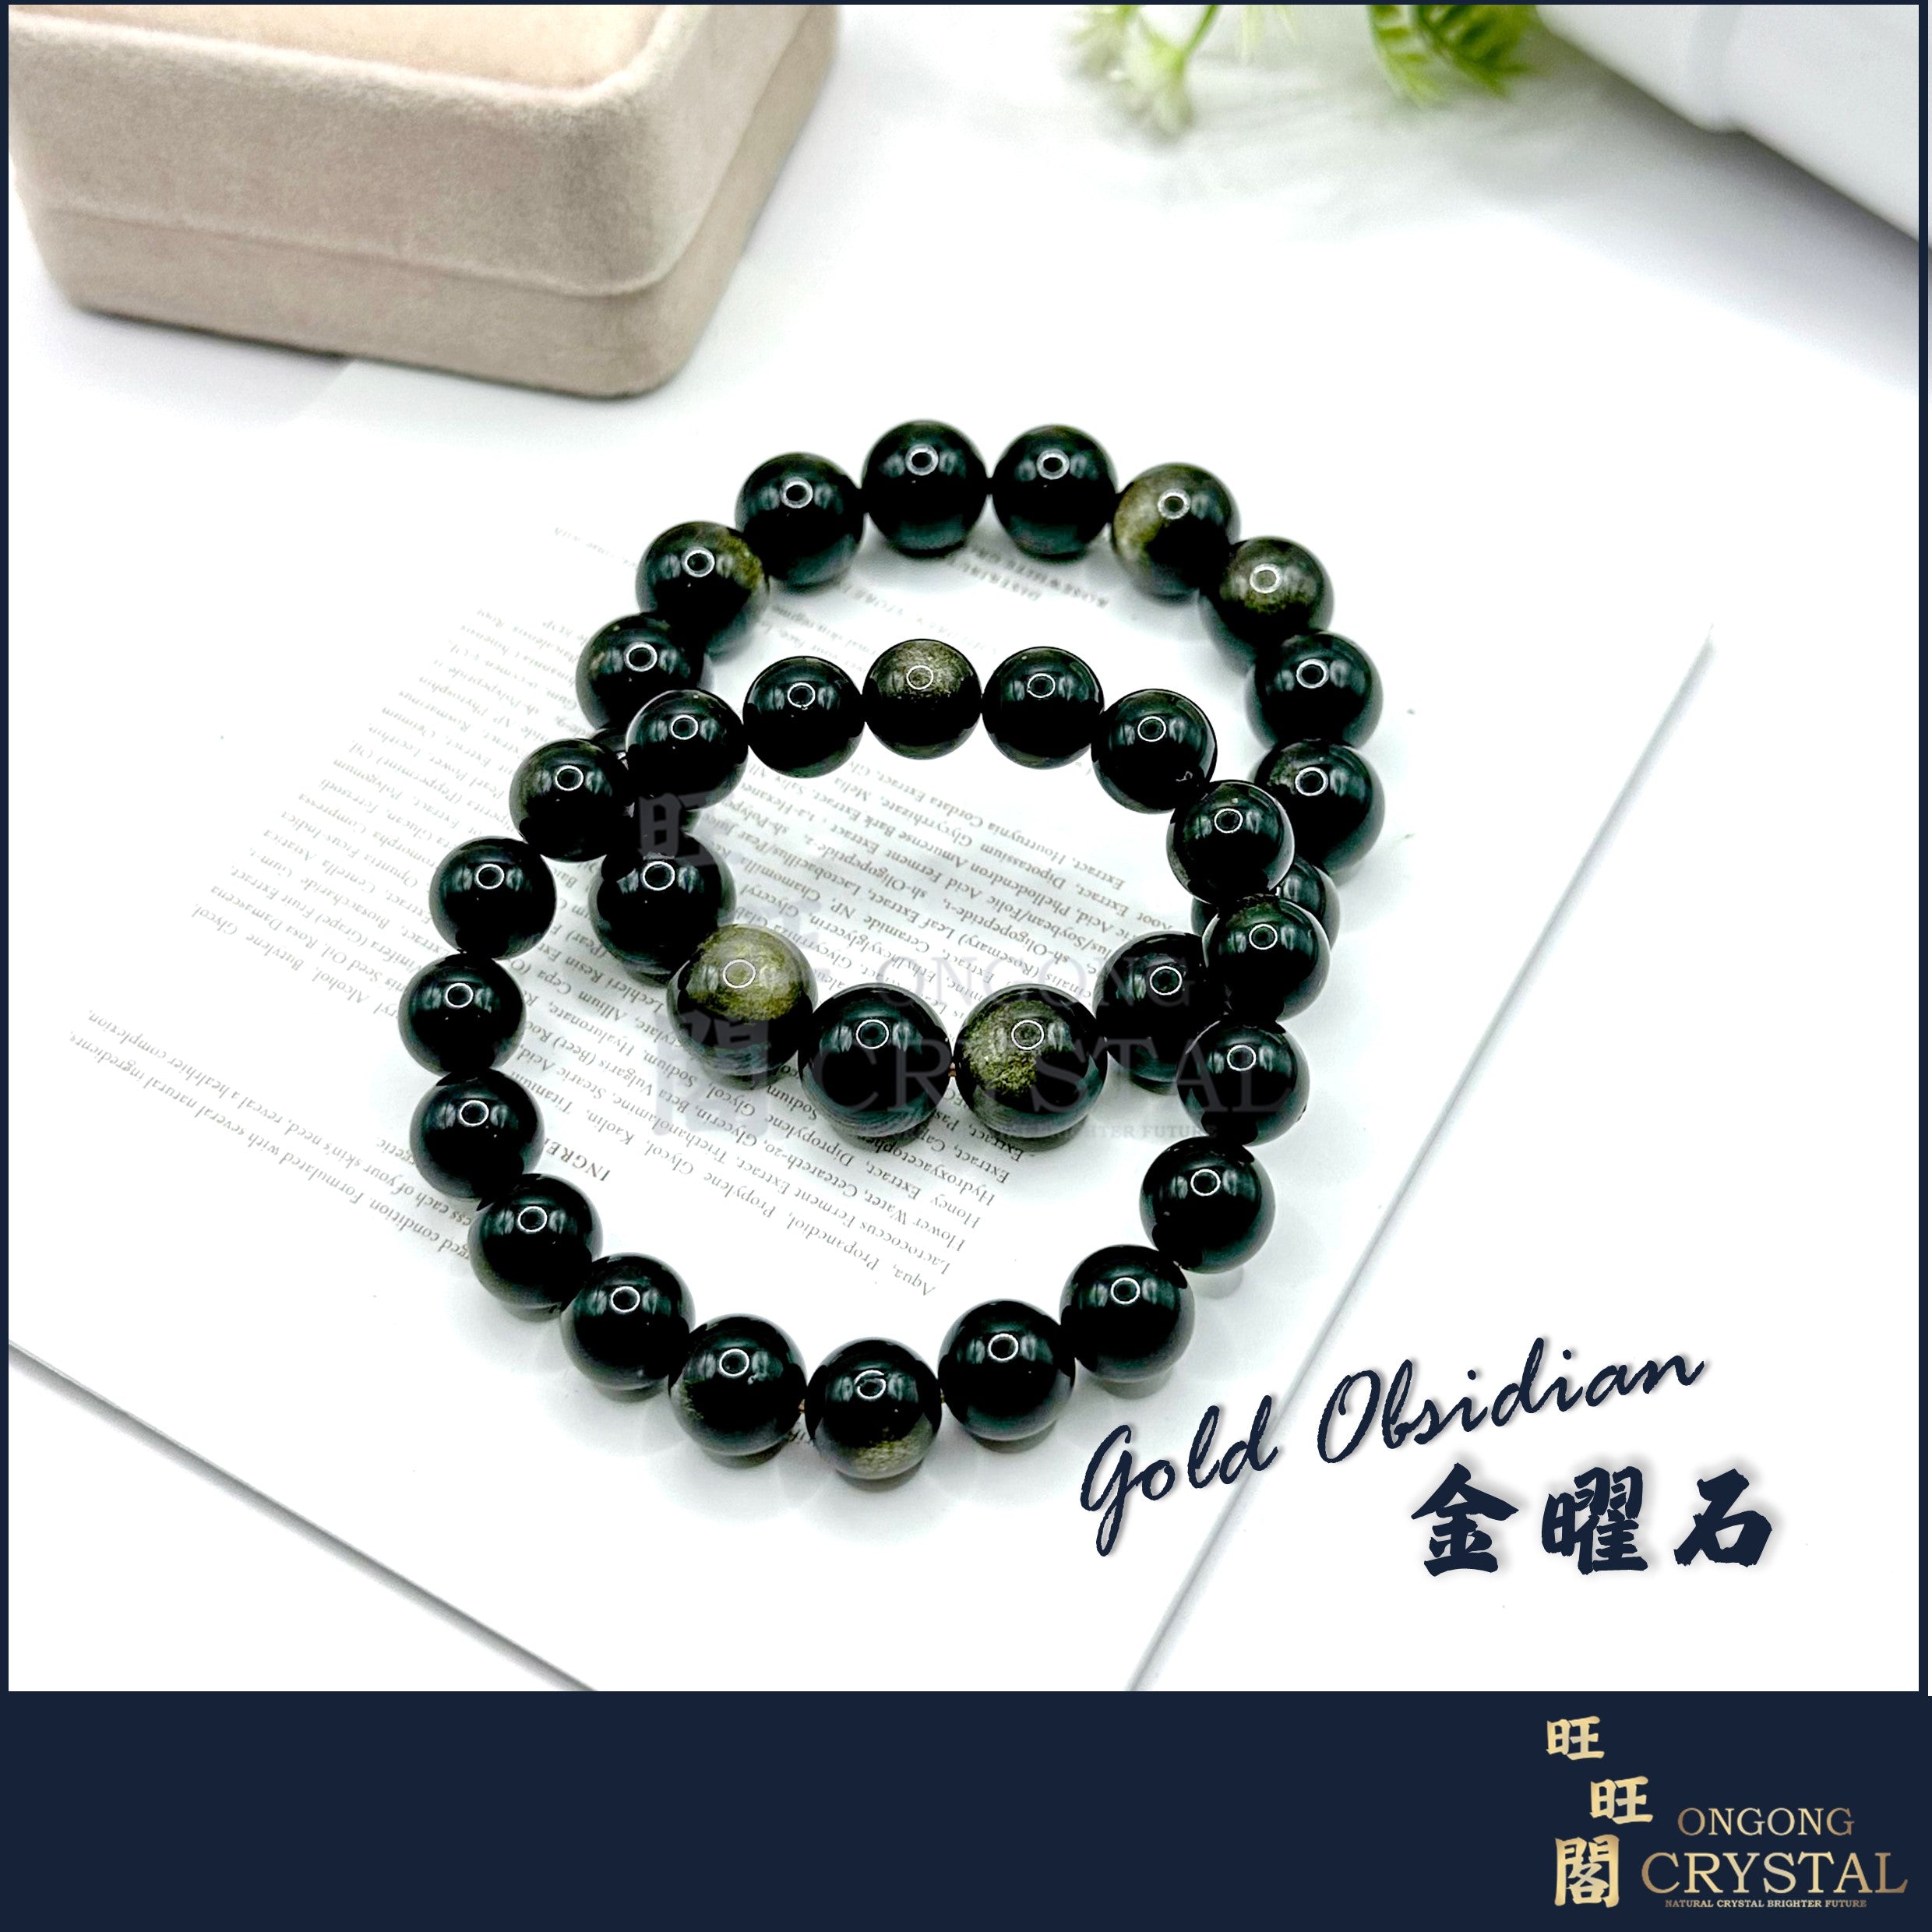 天然金曜石手串 Natural Gold Obsidian Bracelet 10MM - 12MM